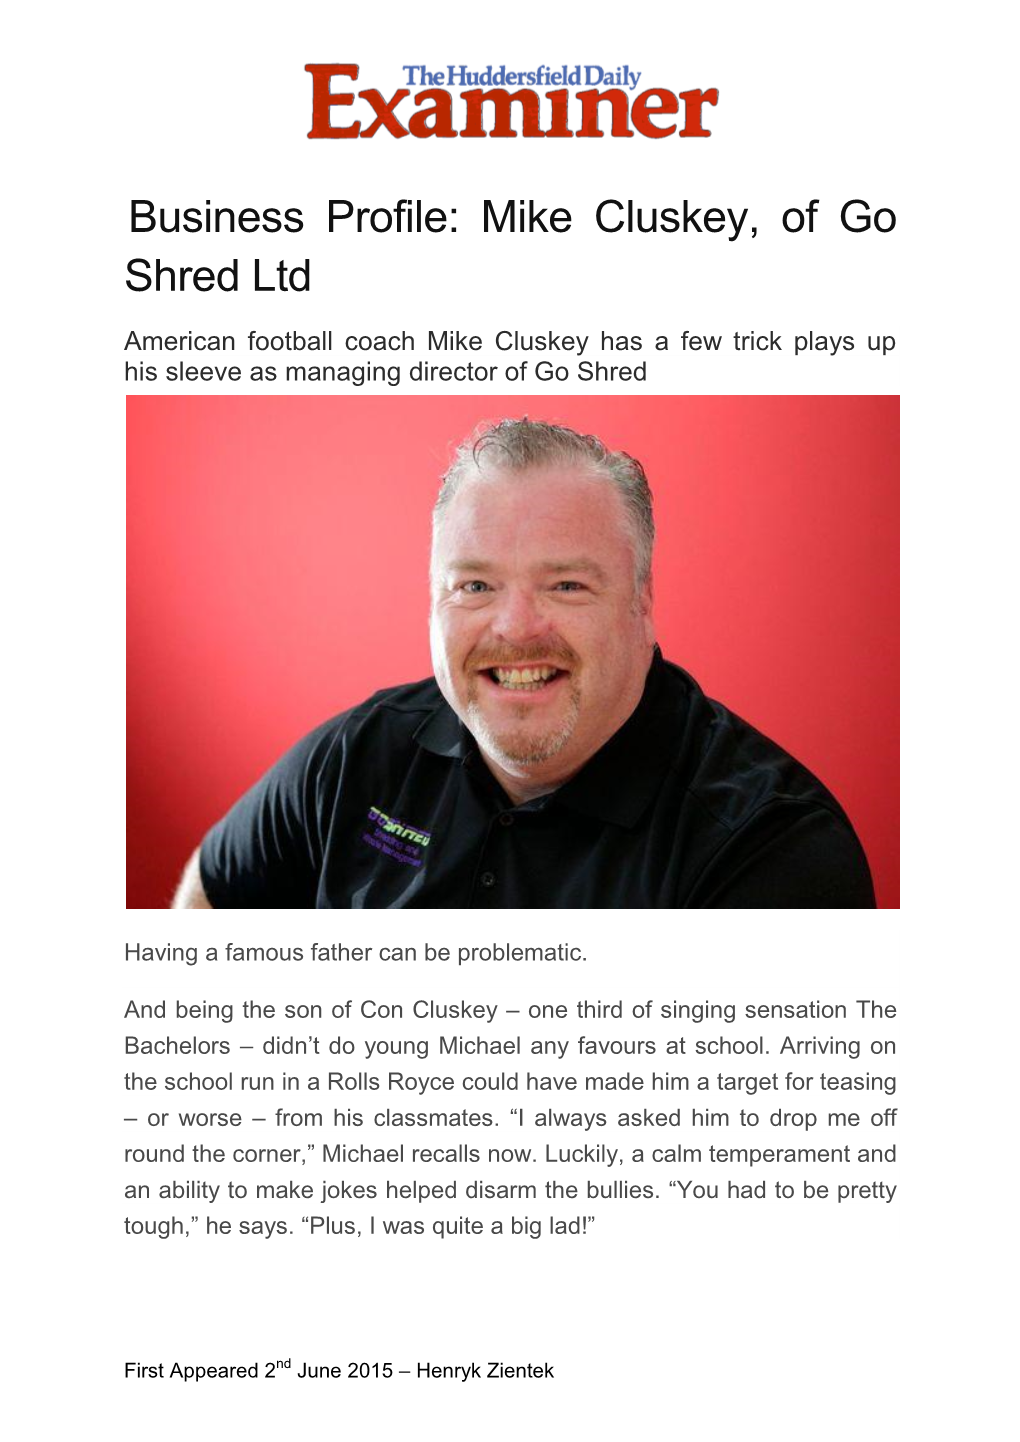 Mike Cluskey, of Go Shred Ltd